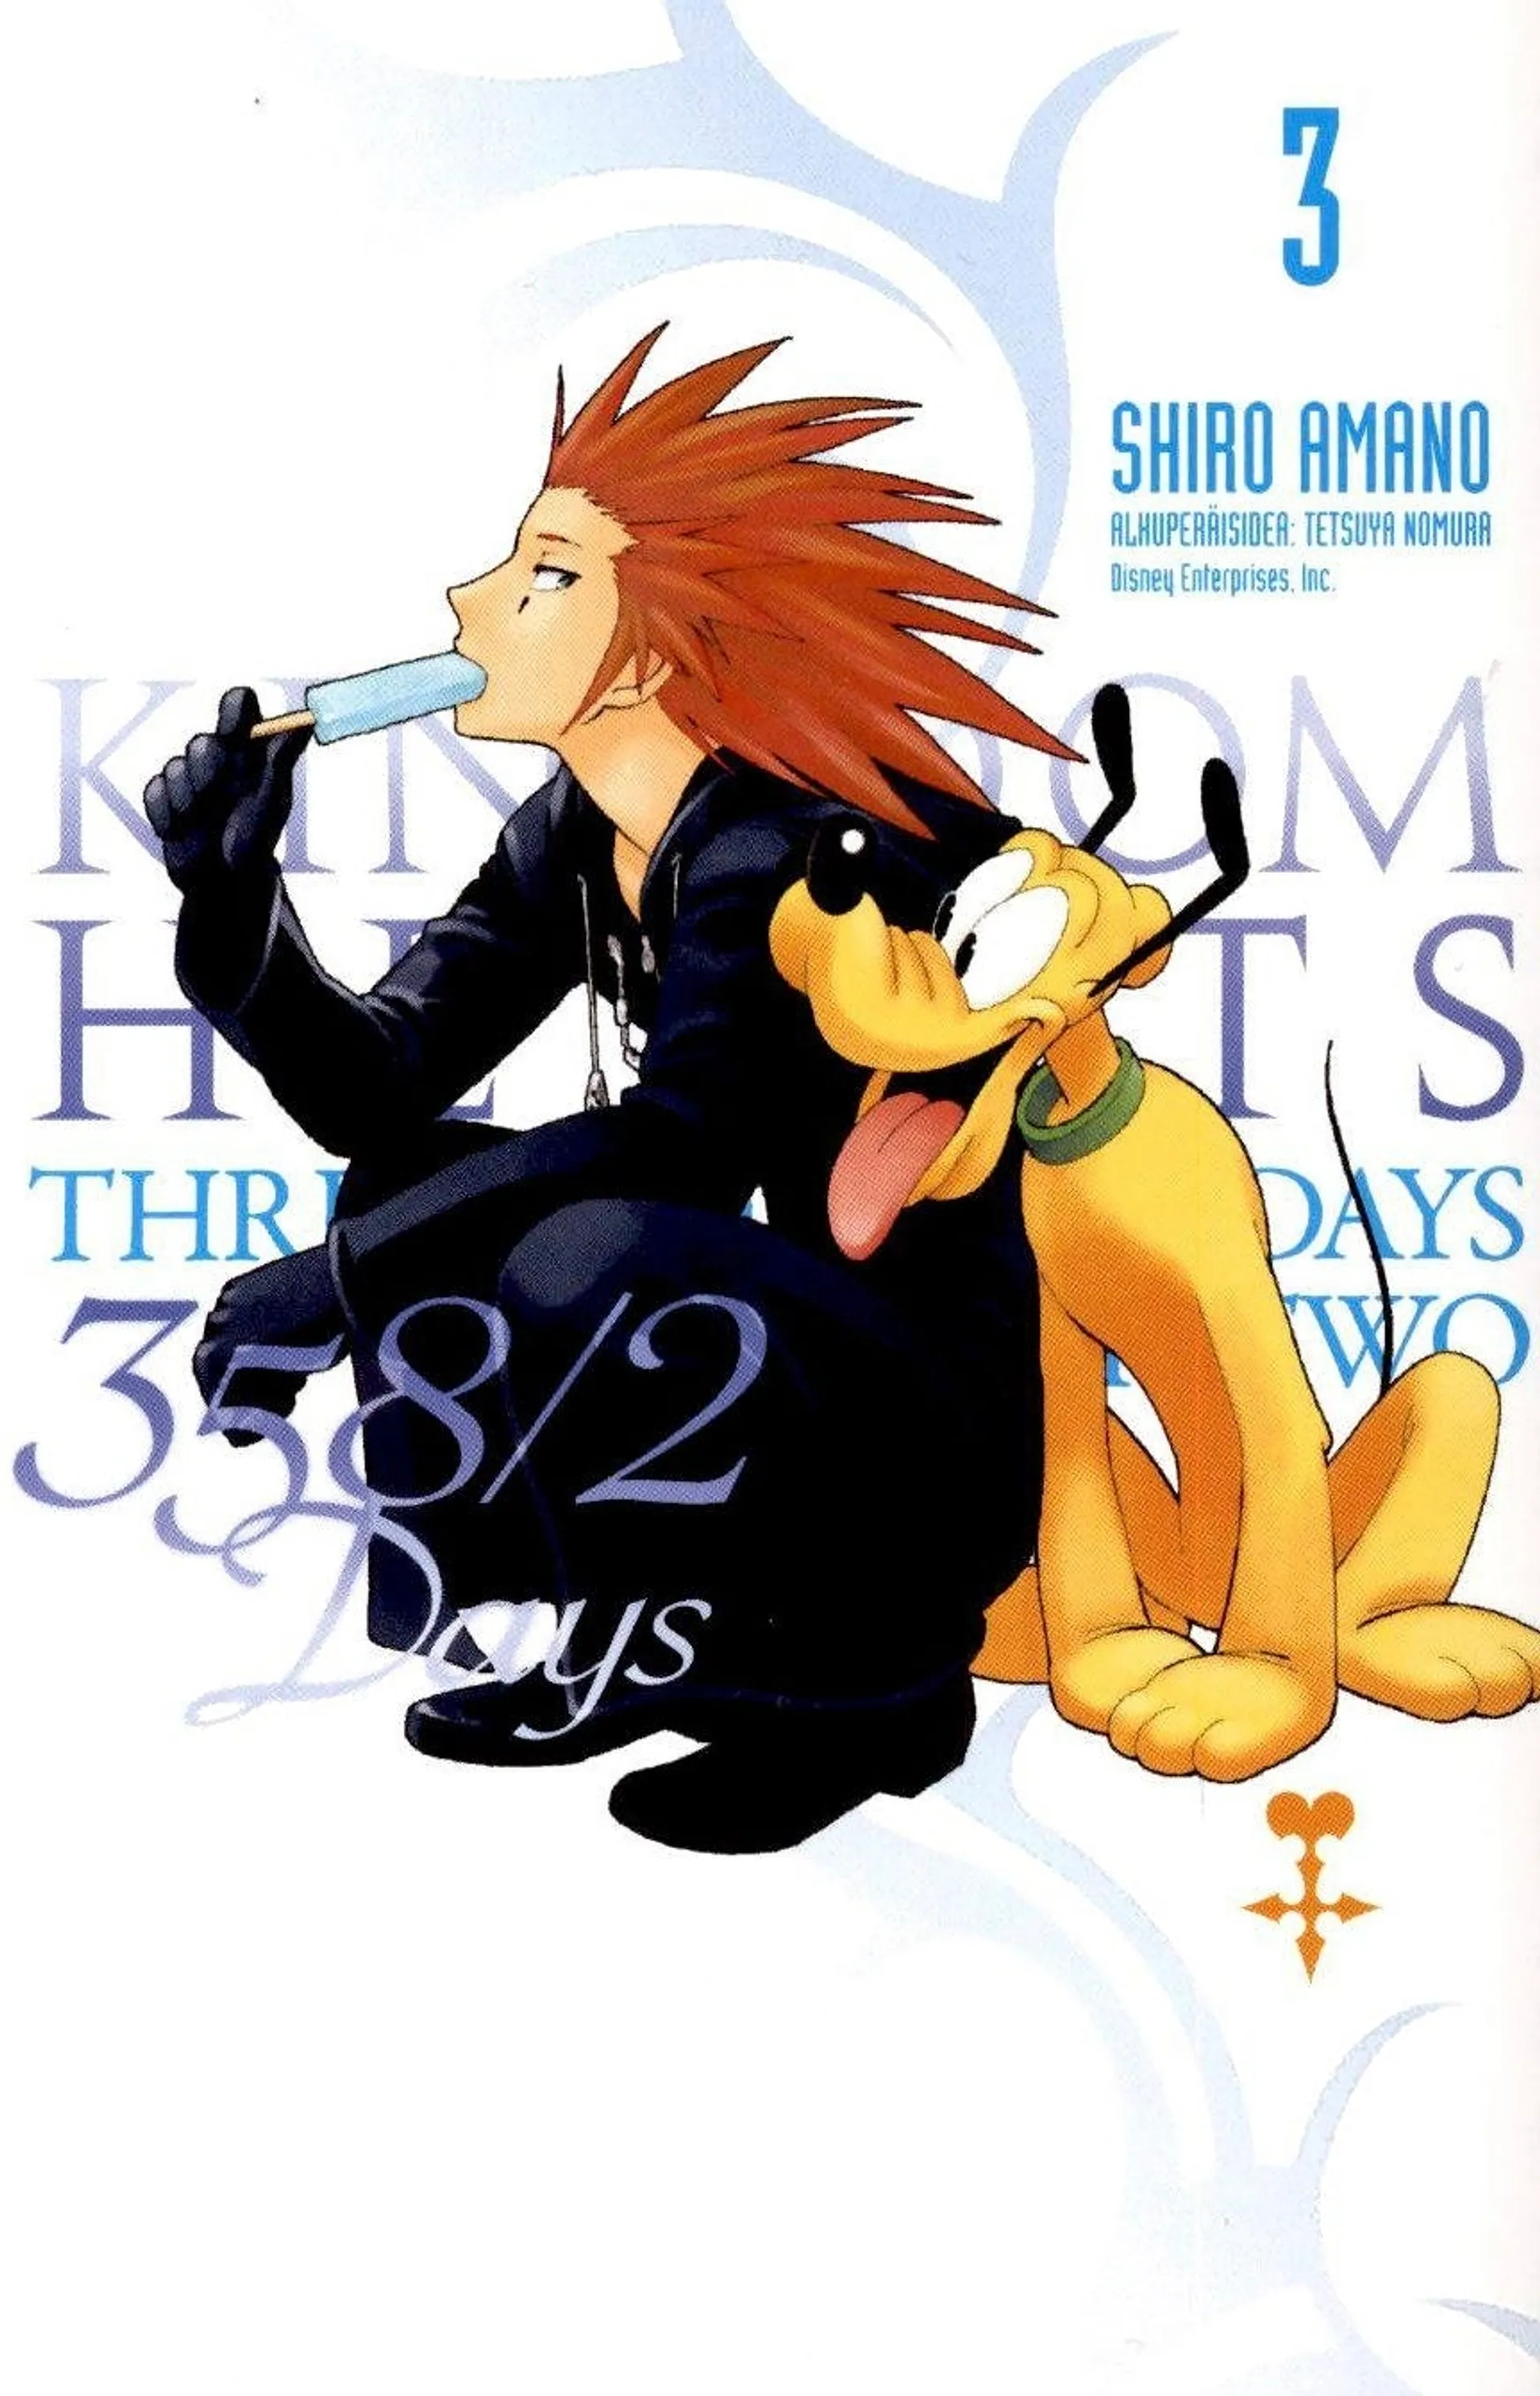 Kingdom Hearts Final Mix